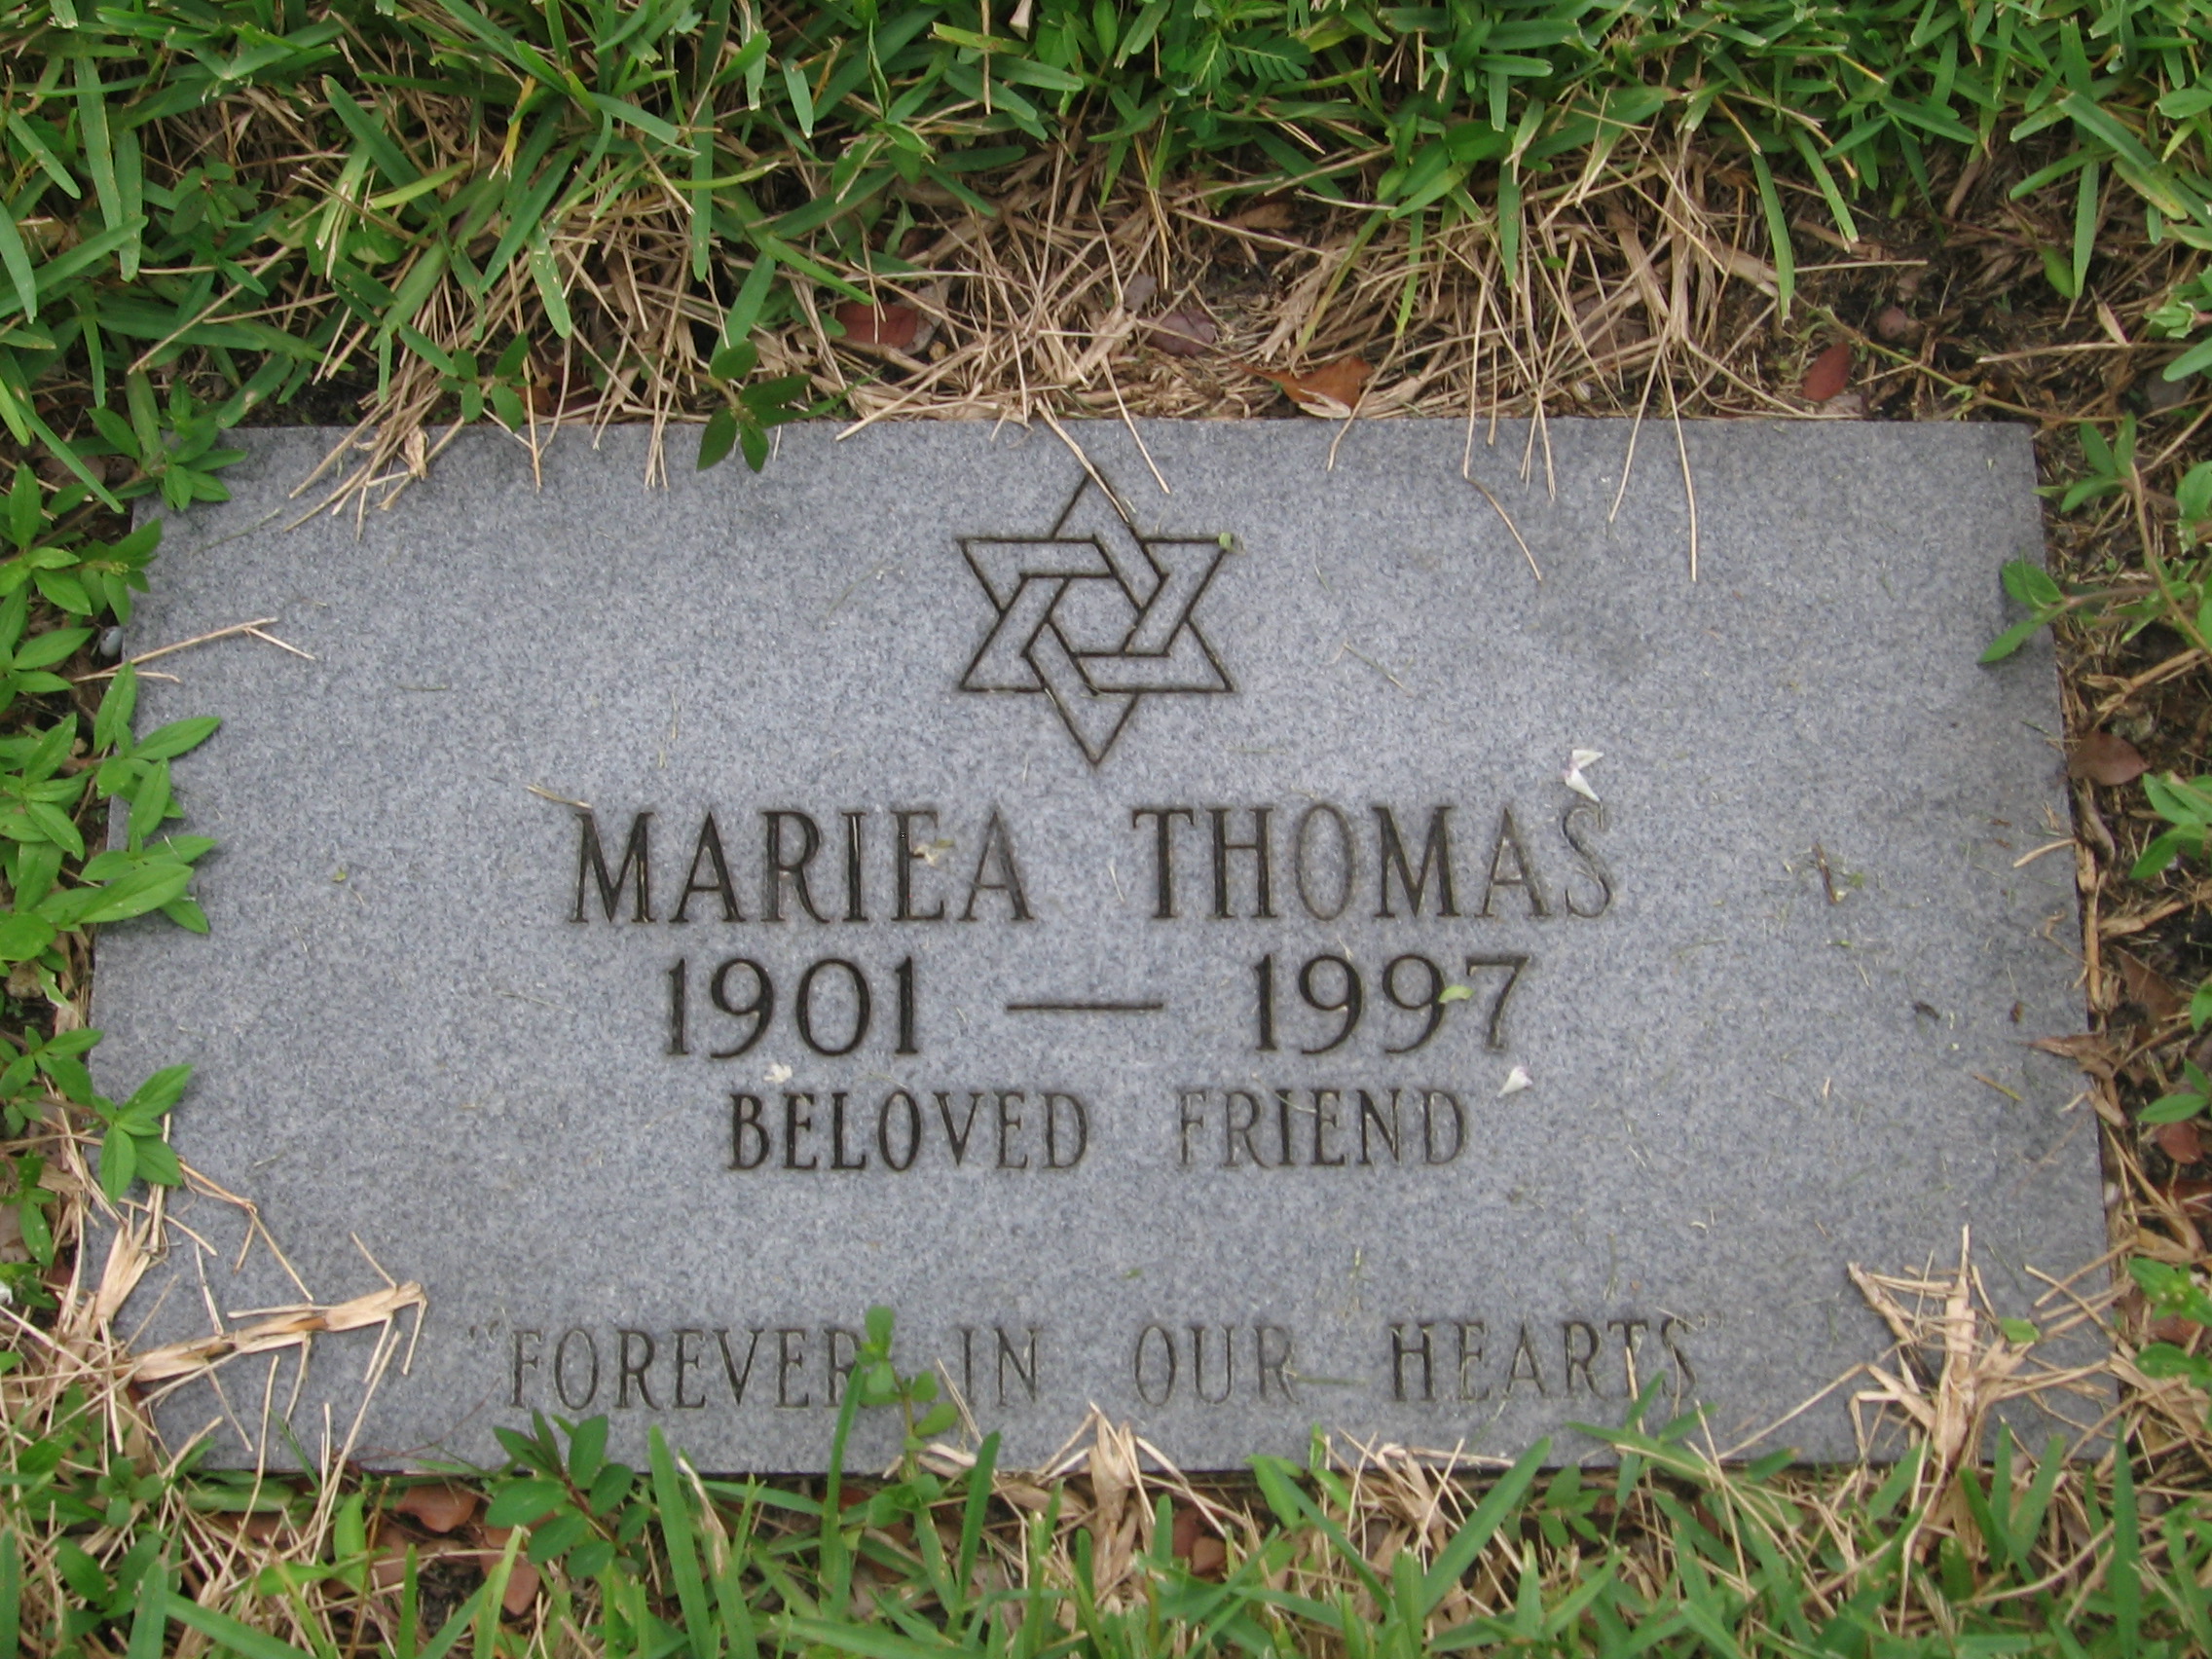 Mariea Thomas